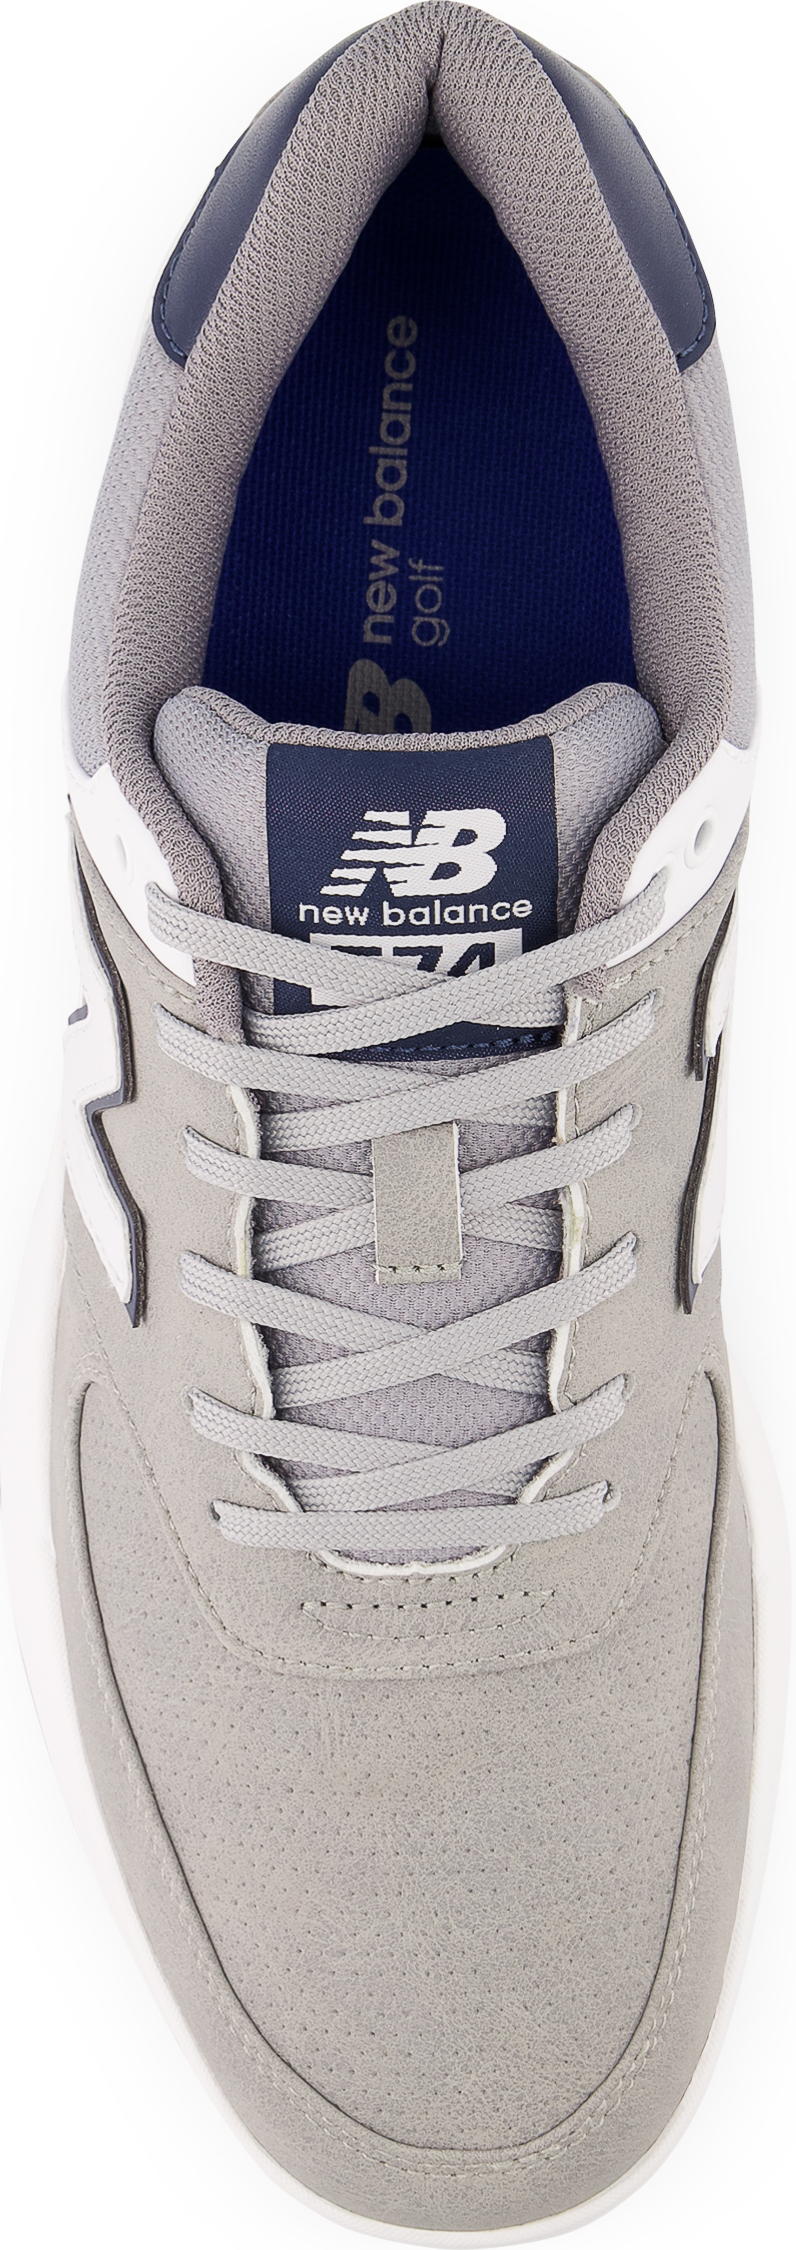 New Balance 574 Greens Golfschuh, grey/white